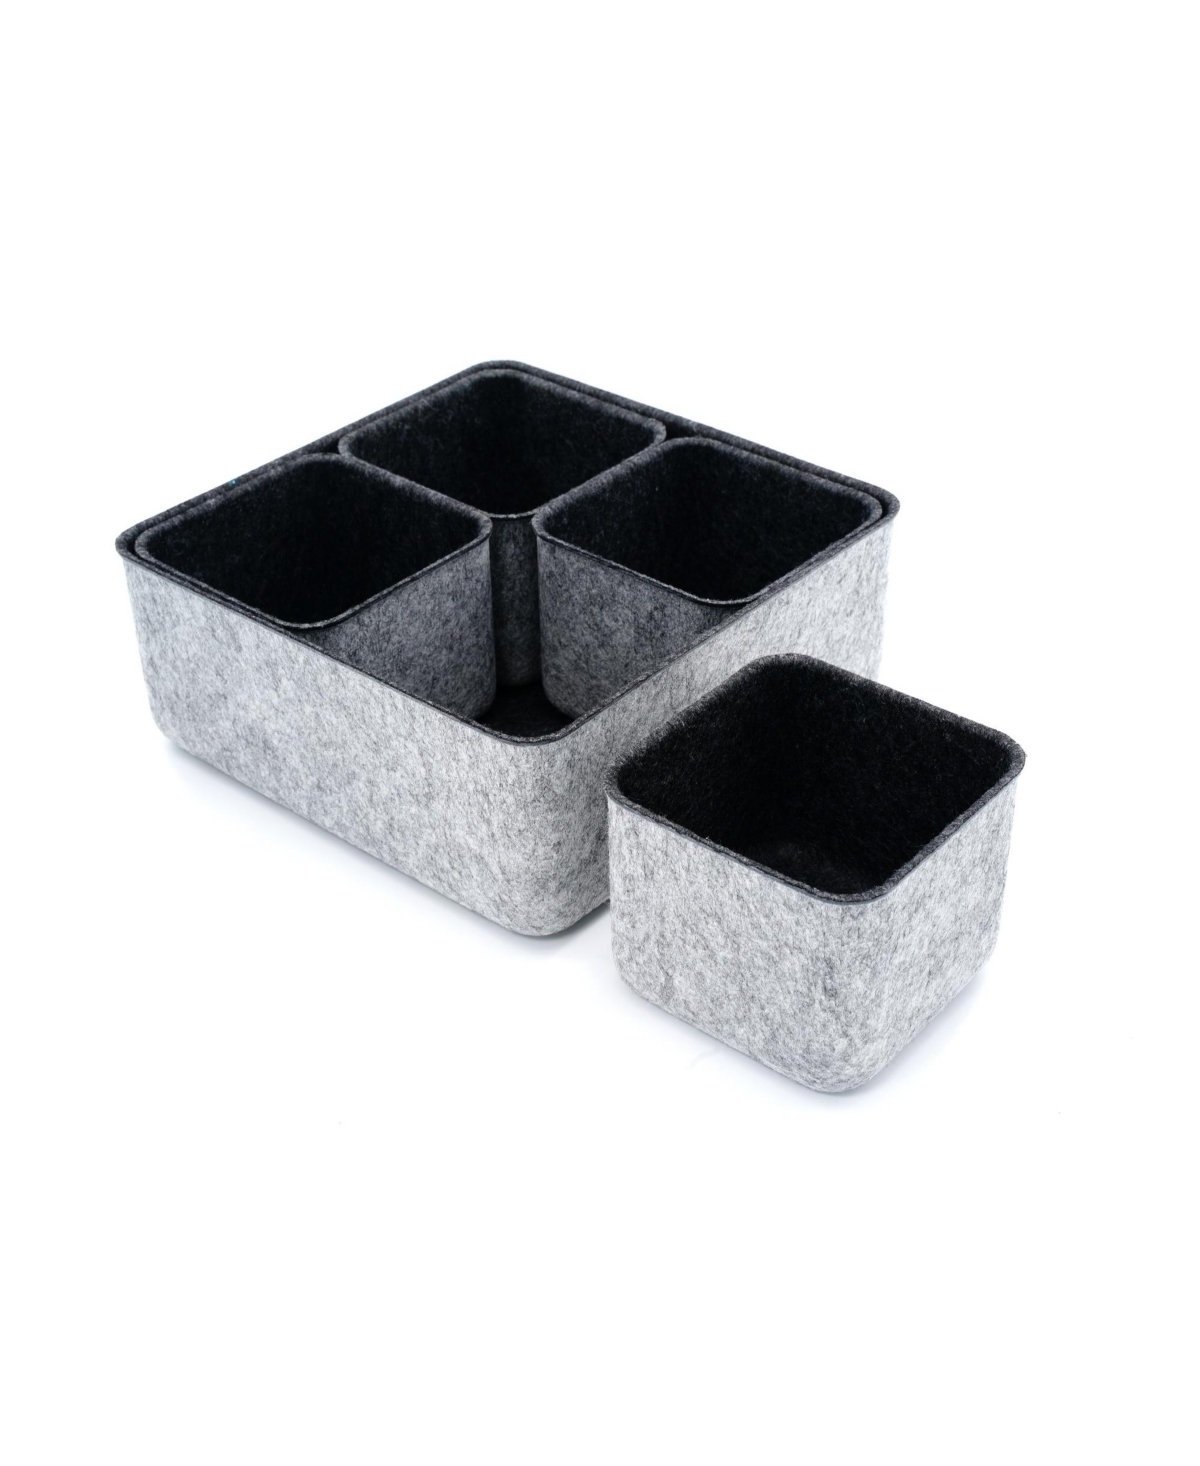 Welaxy 5 Piece Square Felt Storage Bin Set In Charcoal